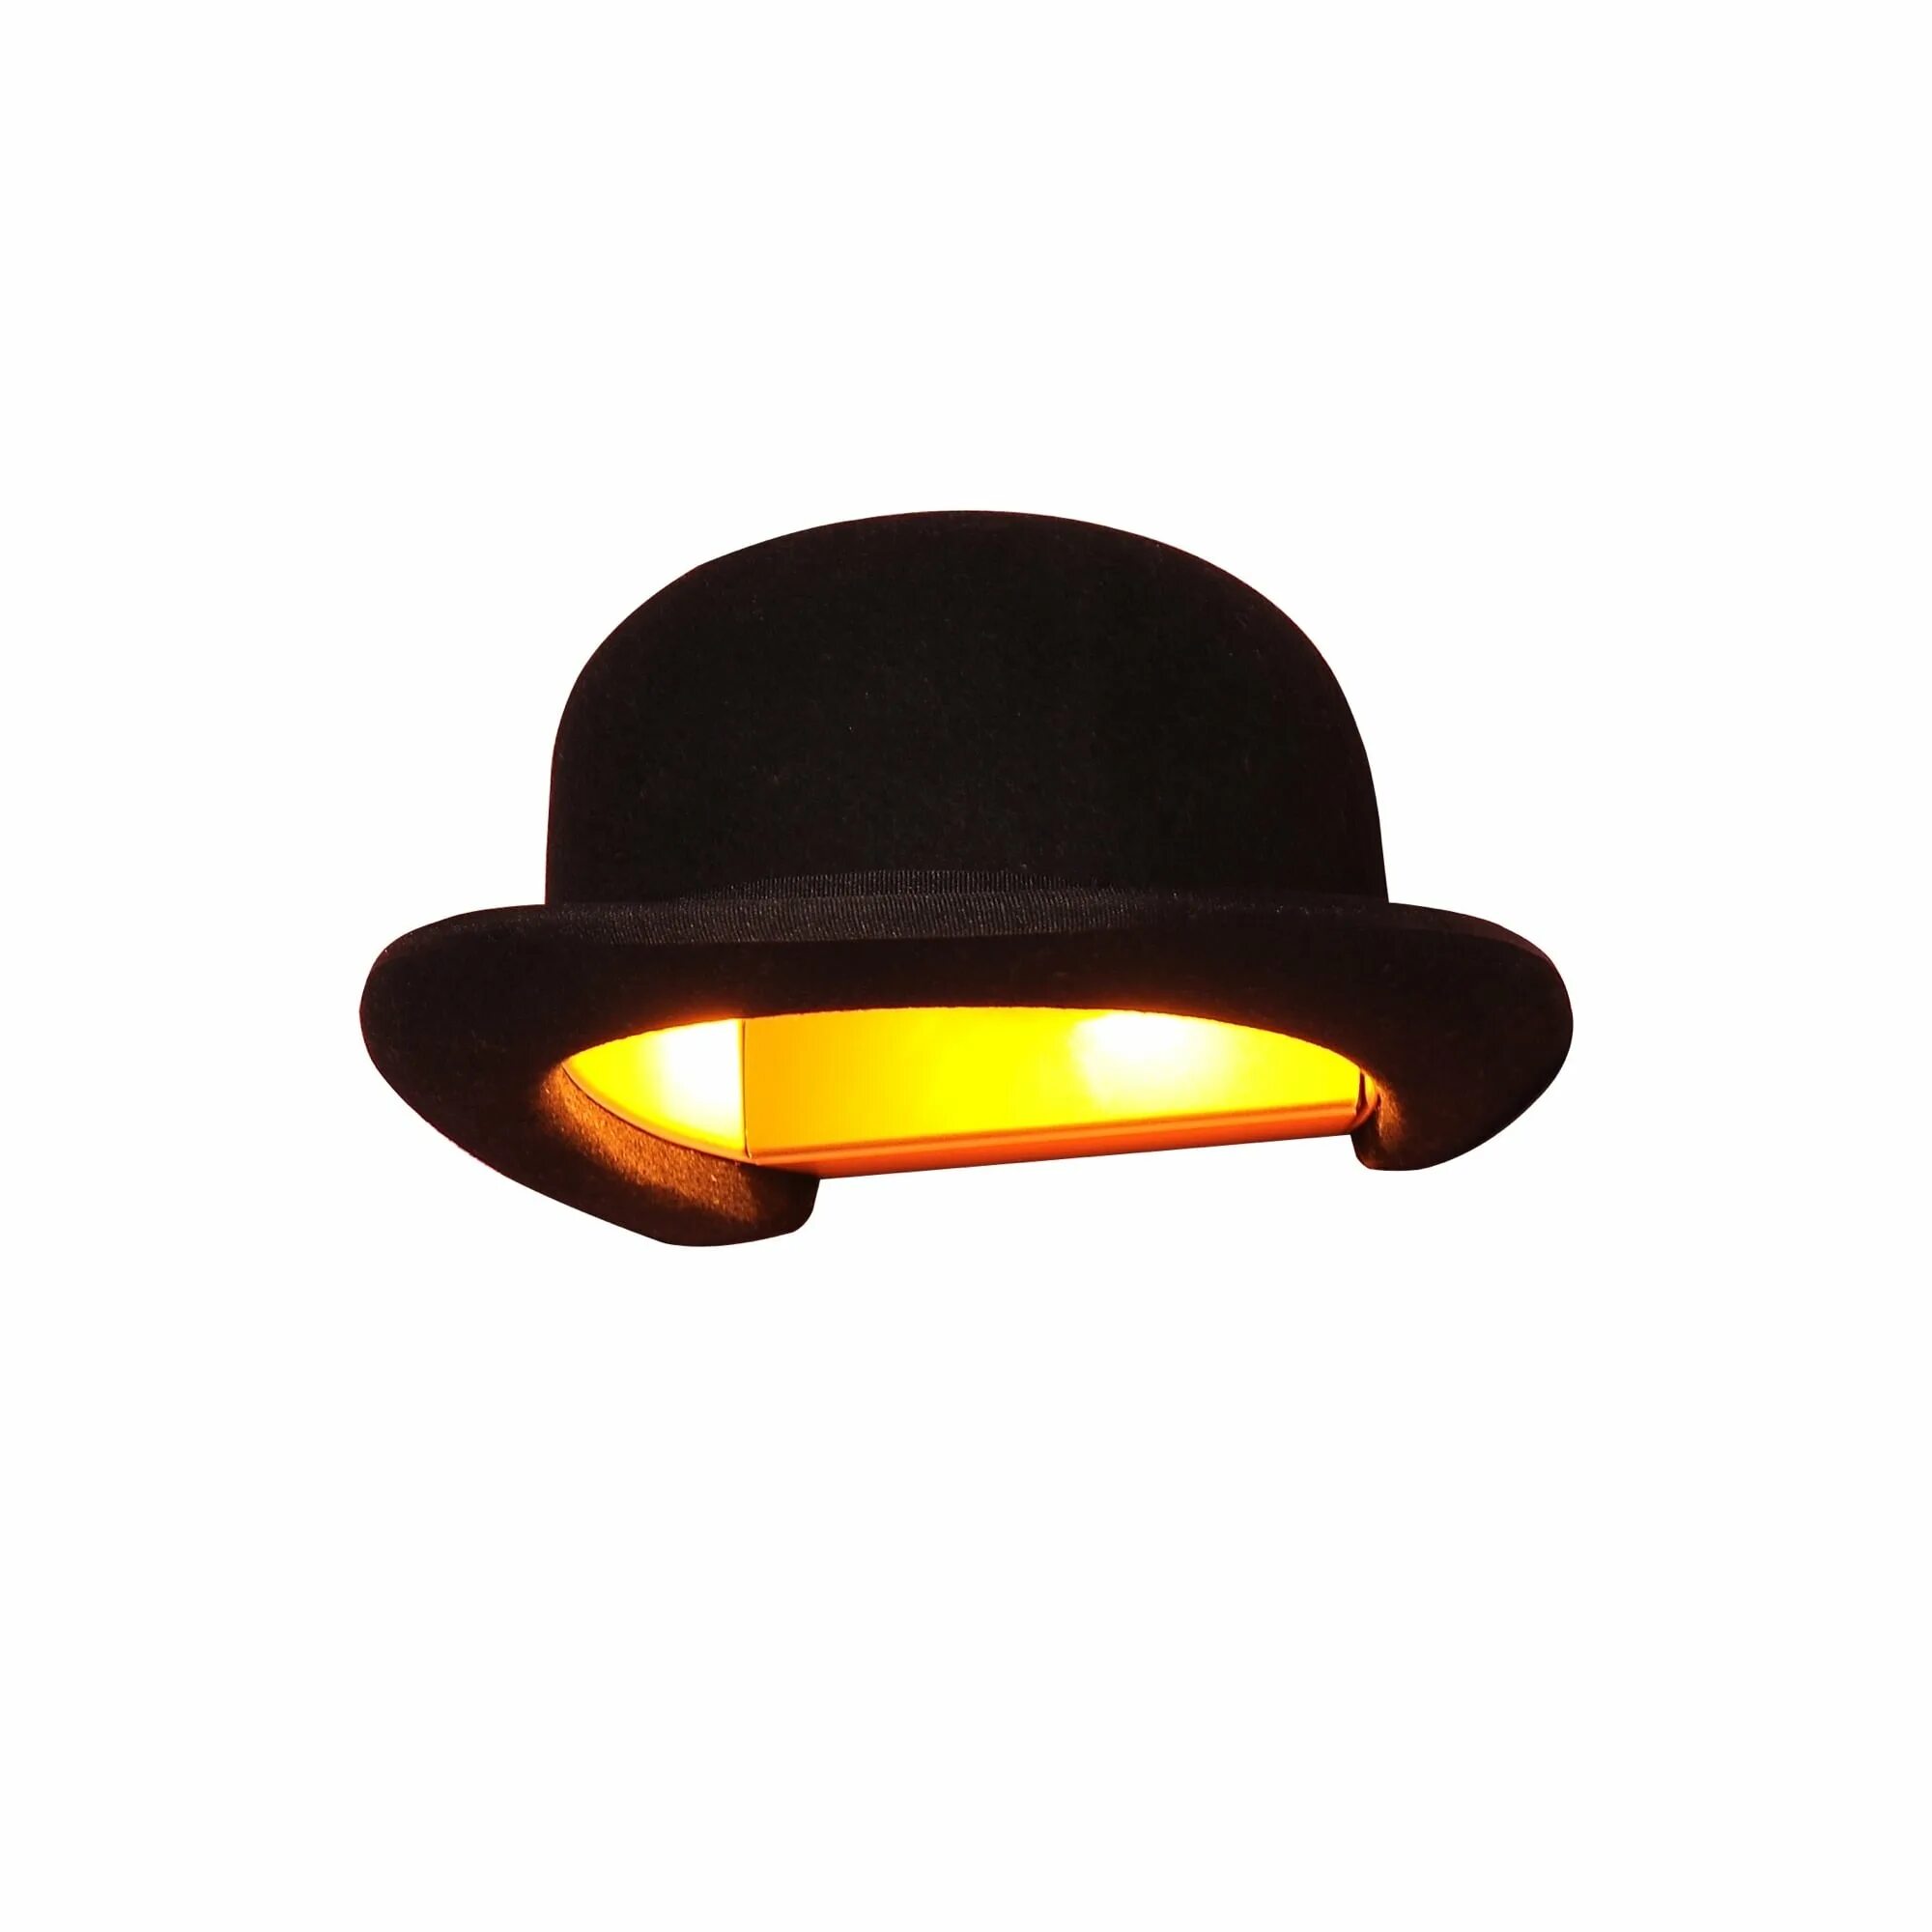 Лампа шляпа. Лампочка в шляпе. Головной убор лампочка. Командирская шляпа с лампочками. Light hat